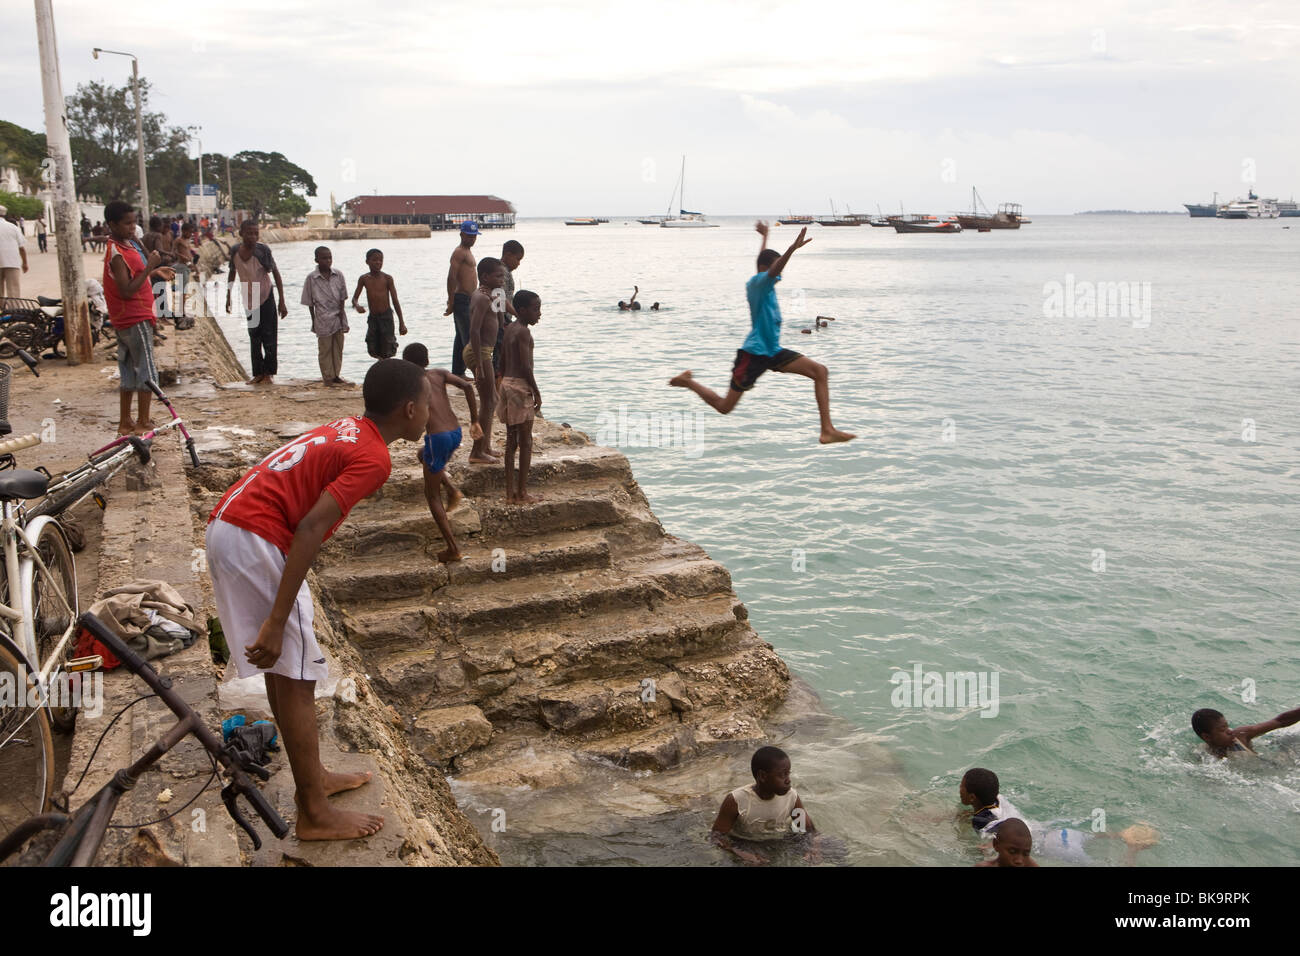 Boys swimming in the harbour - Stonetown, Zanzibar, Tanzania. Stock Photo